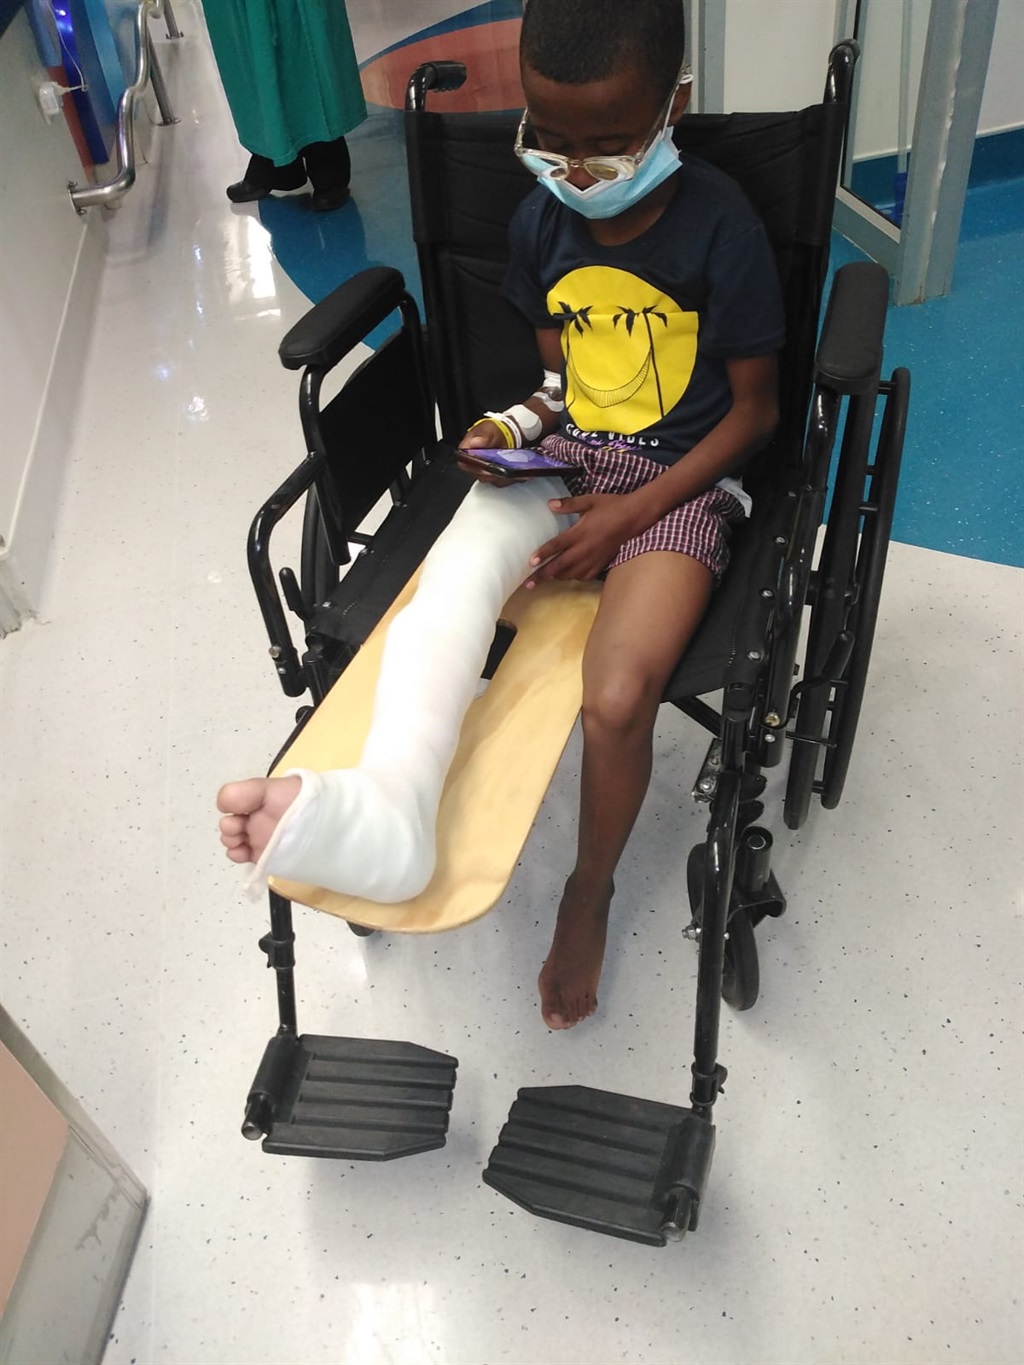 Just last month Deshaan broke his right leg again.